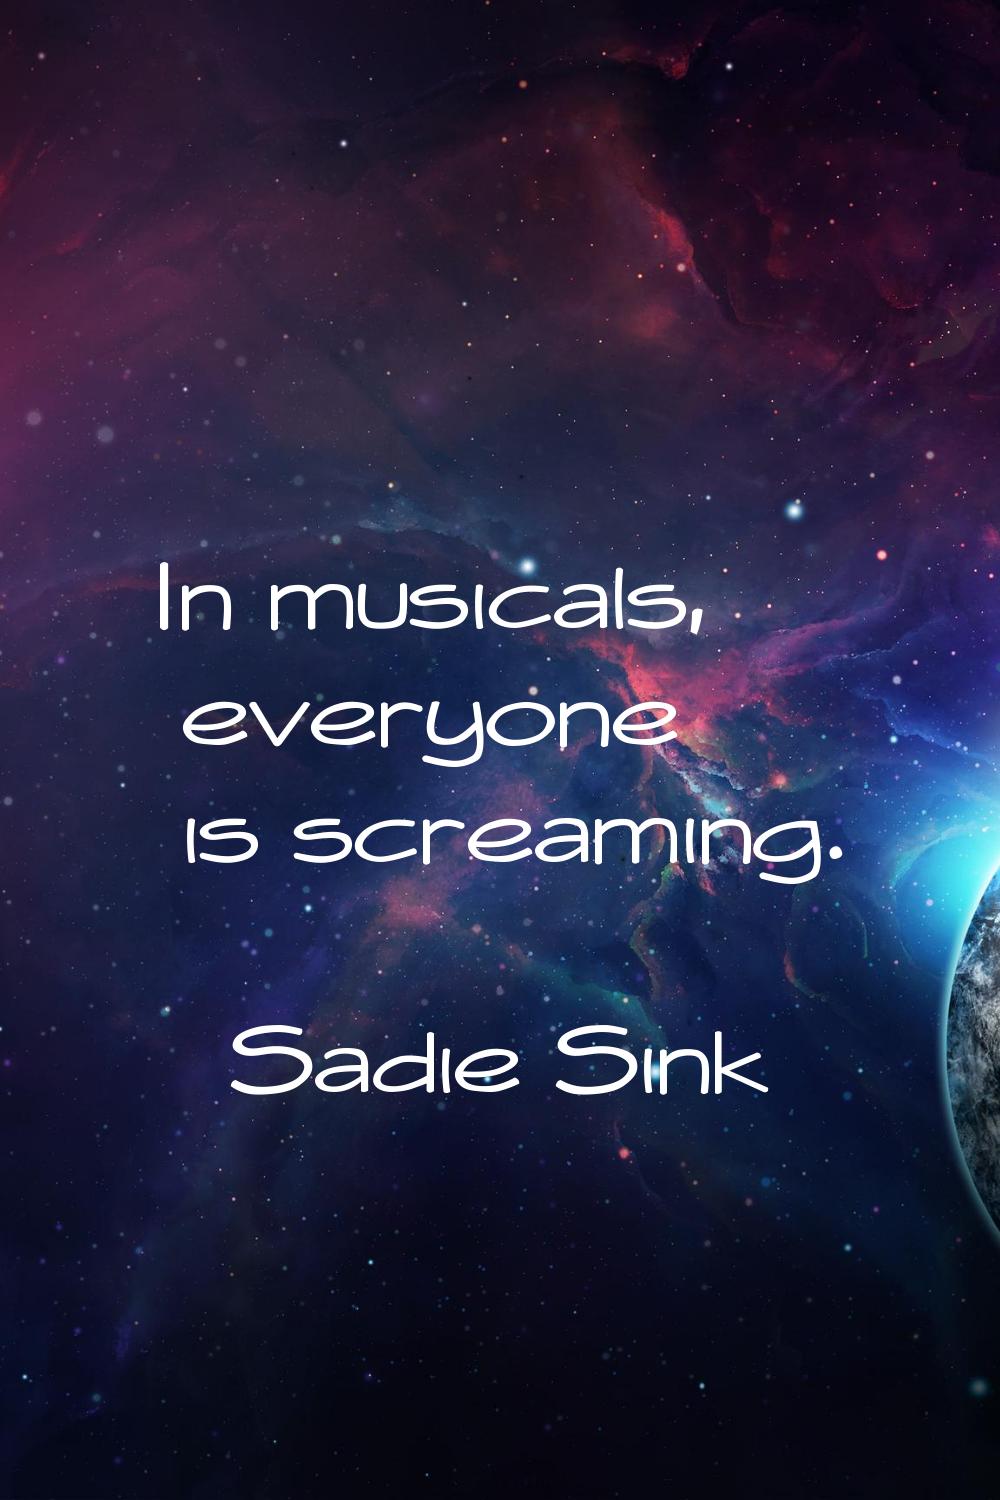 In musicals, everyone is screaming.